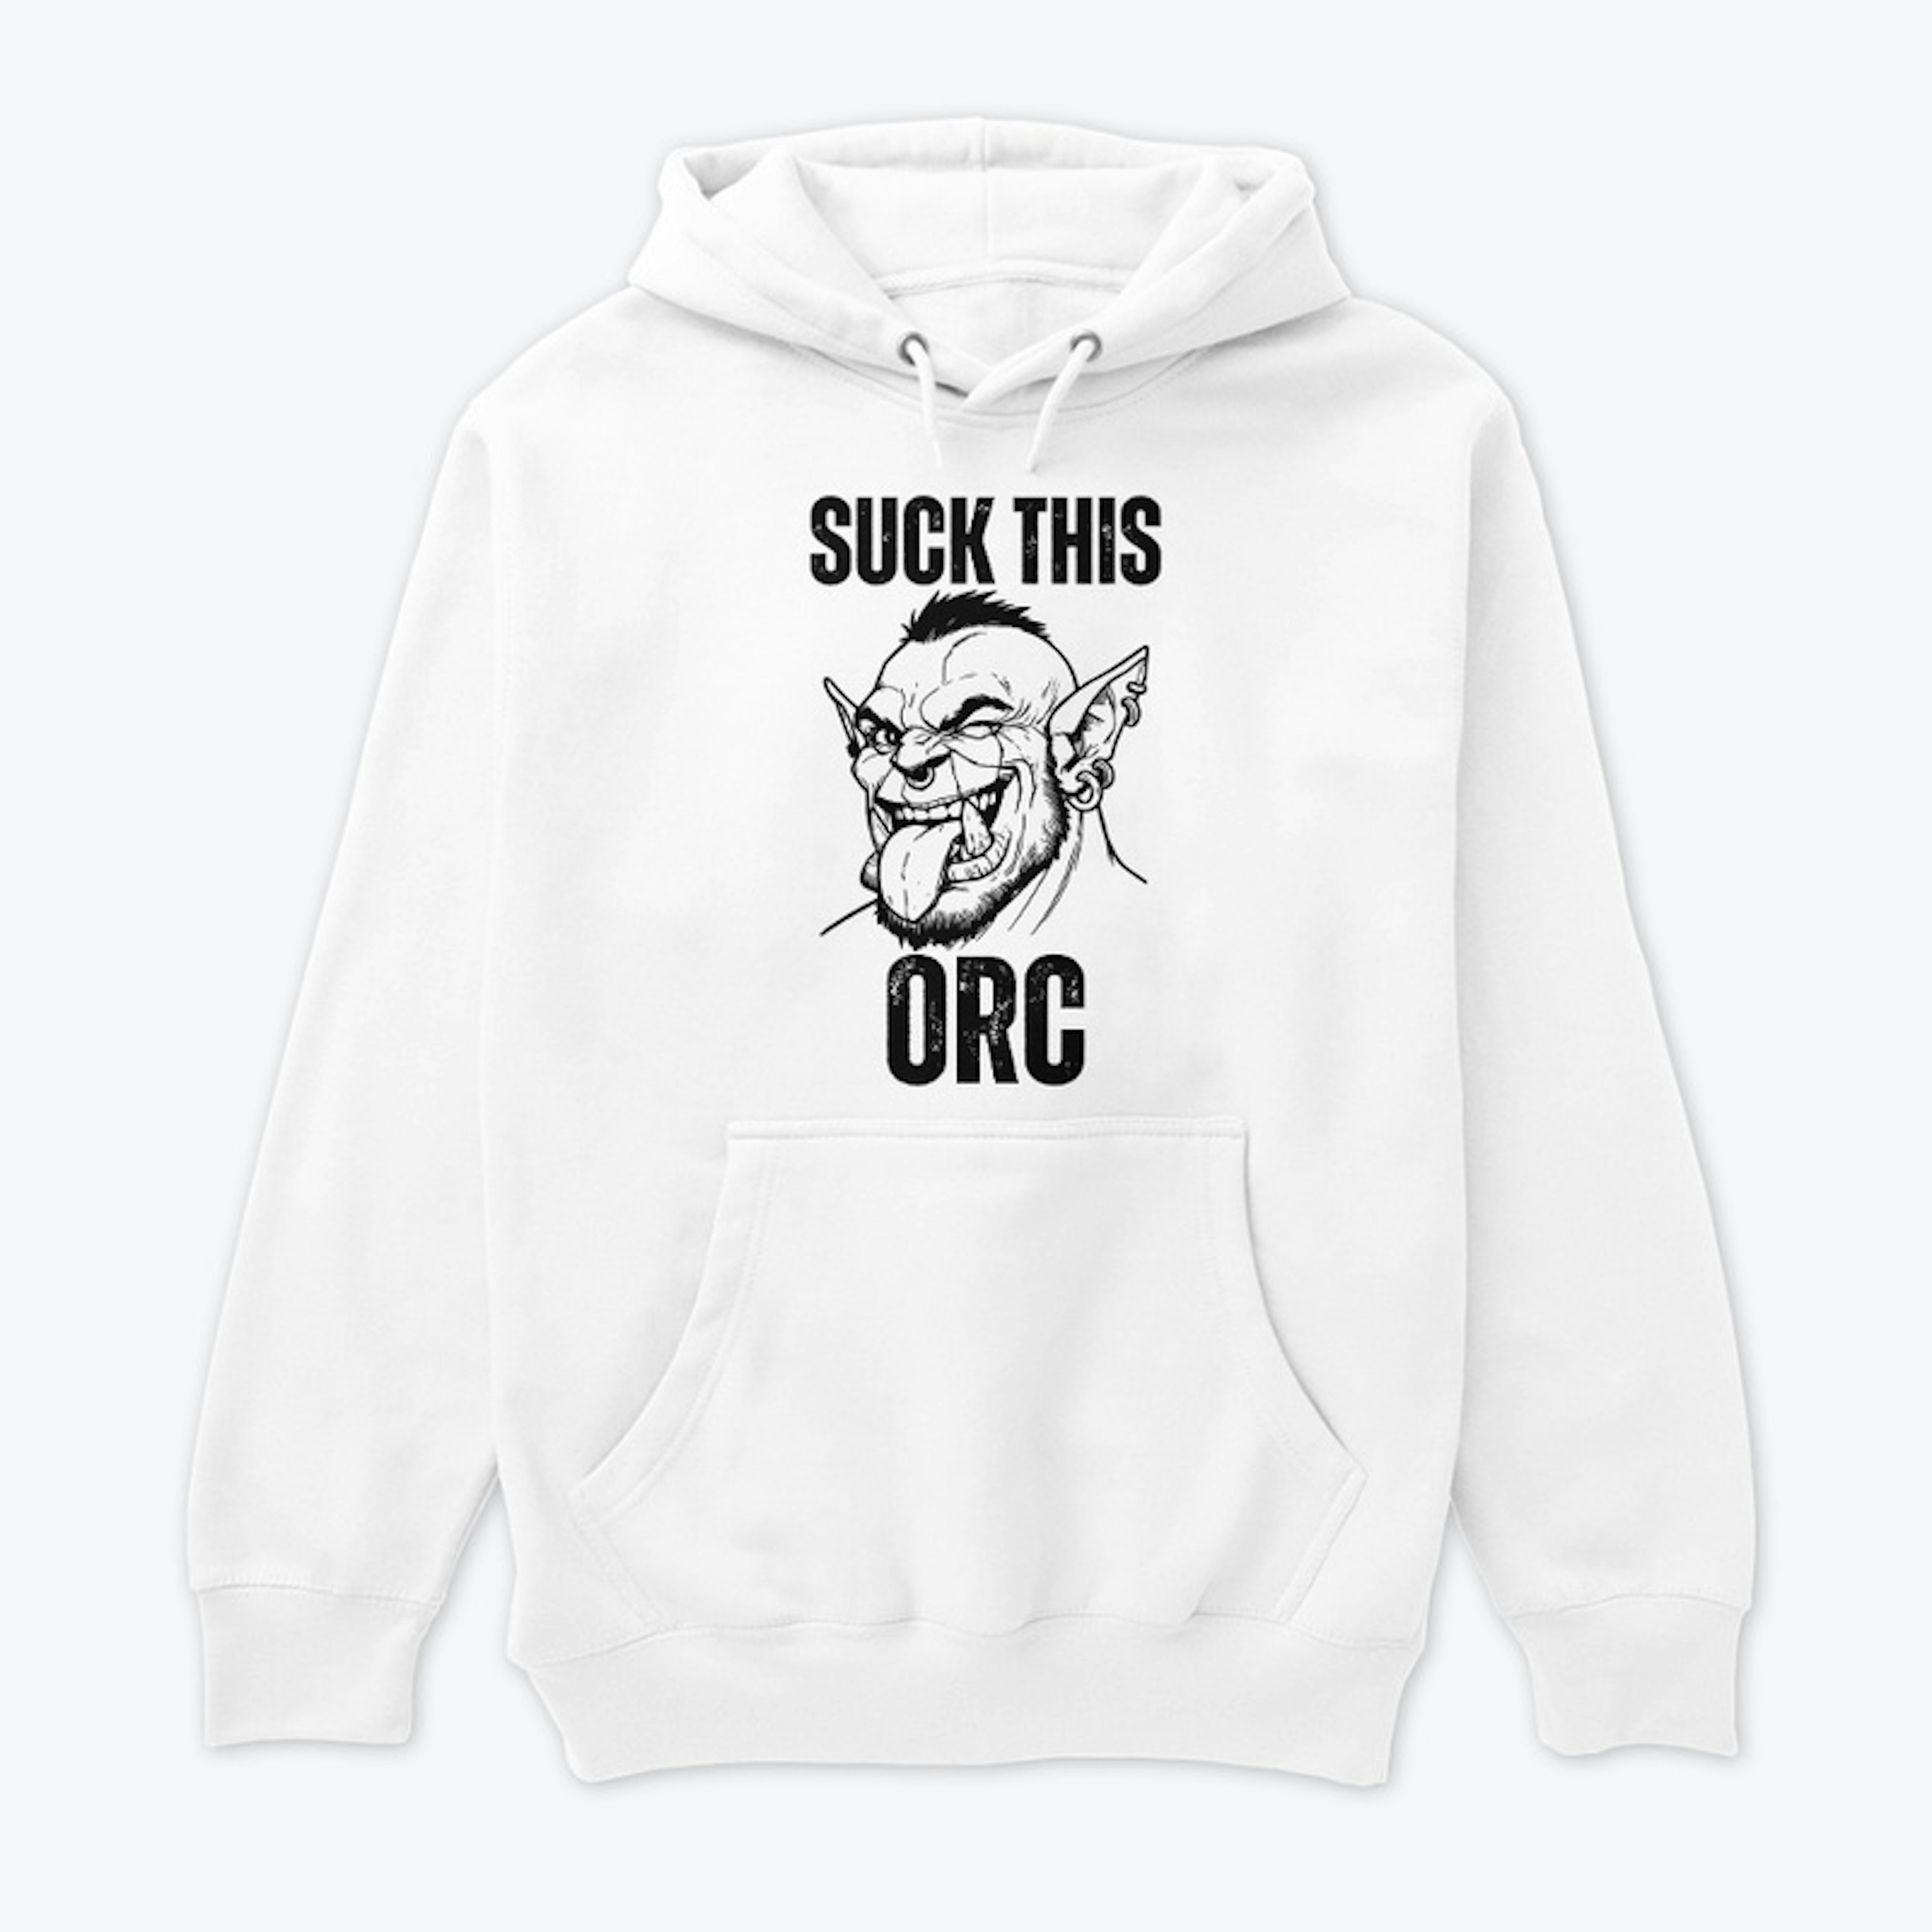 Suck this ORC!